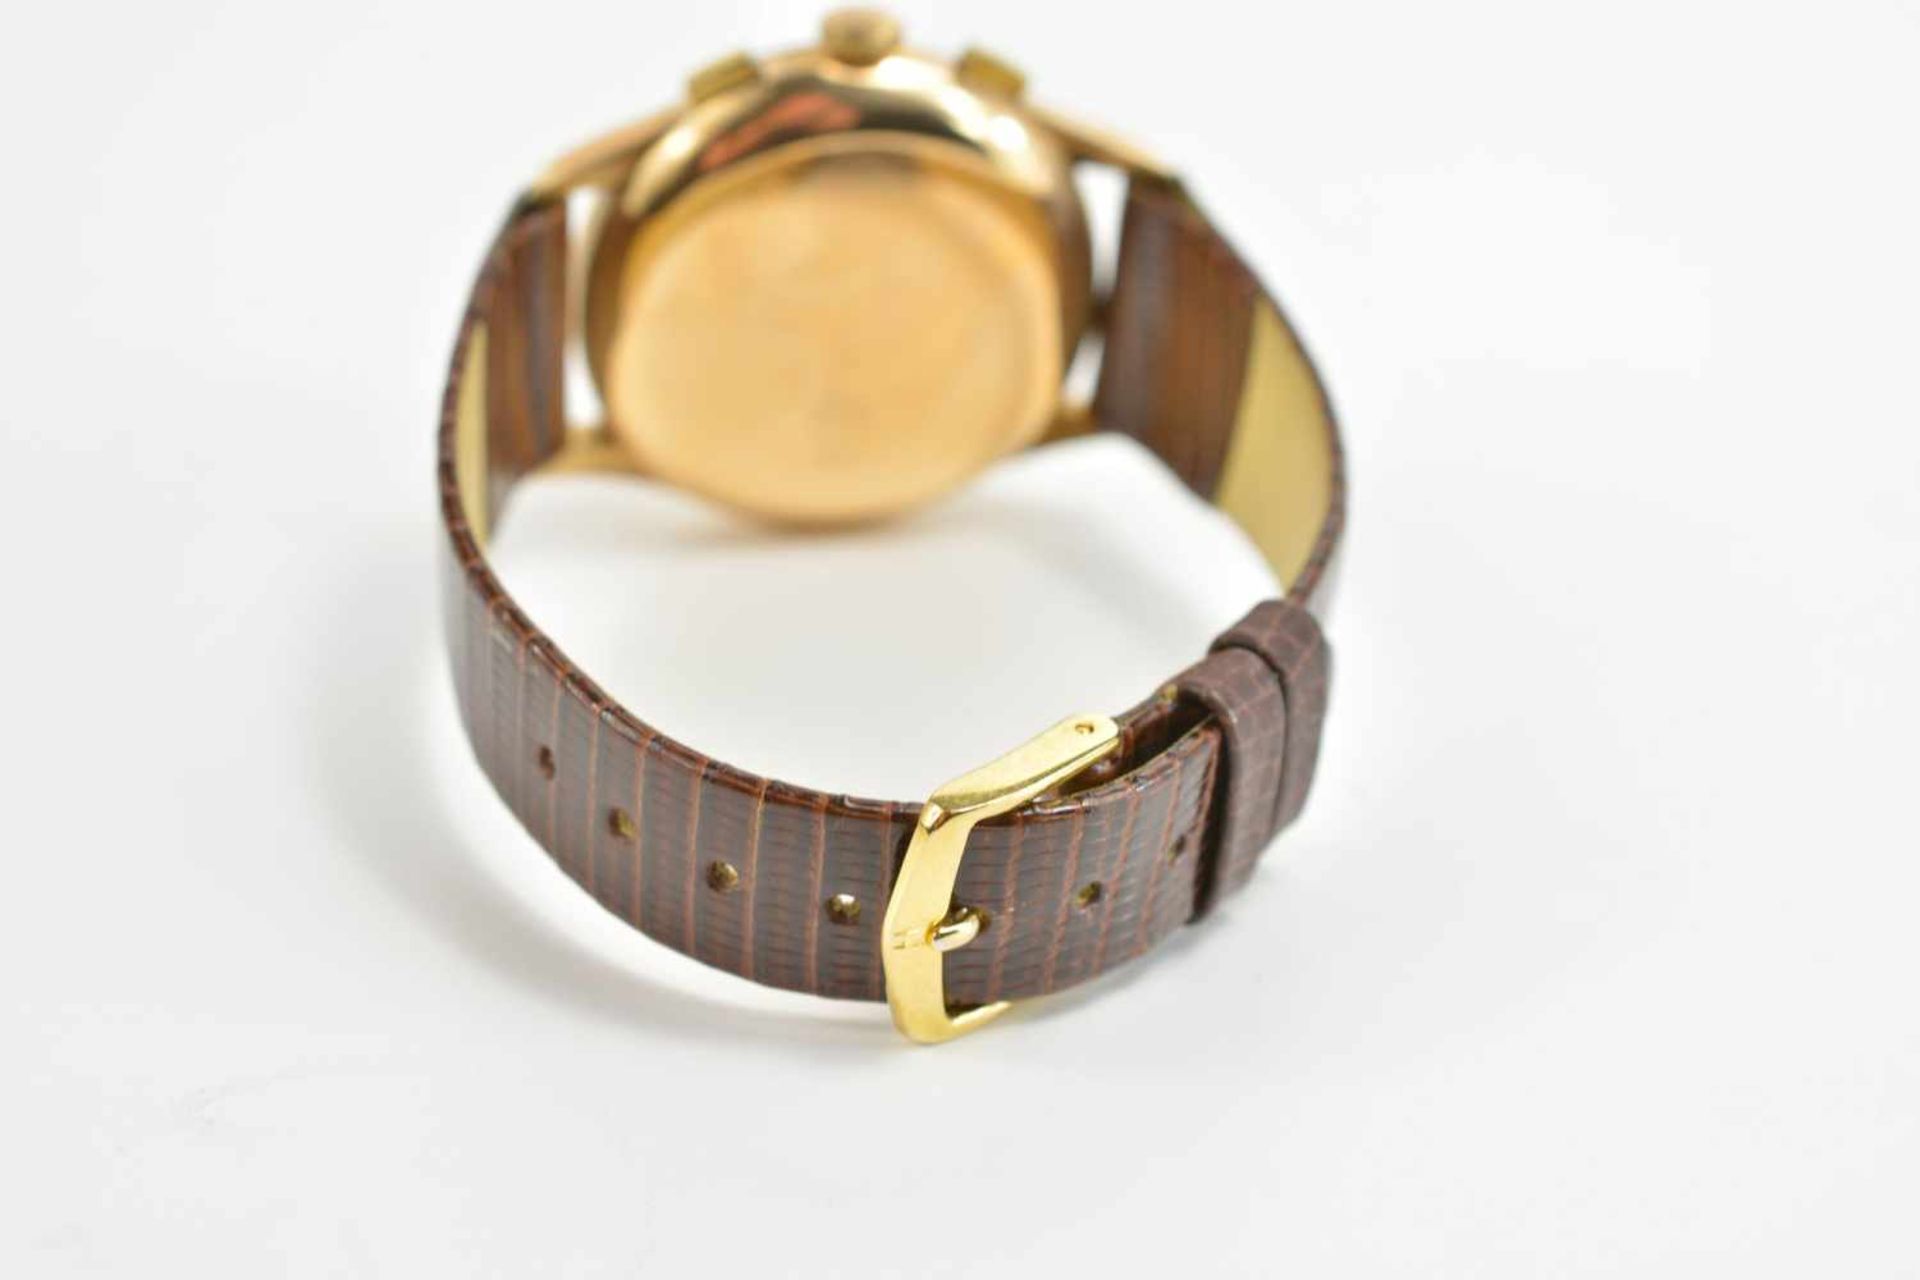 Actua Watch Geneve ChronographHandaufzug, Gehäuse 750 Rotgold, Durchmesser 37 mm, Armband Leder, - Bild 3 aus 4